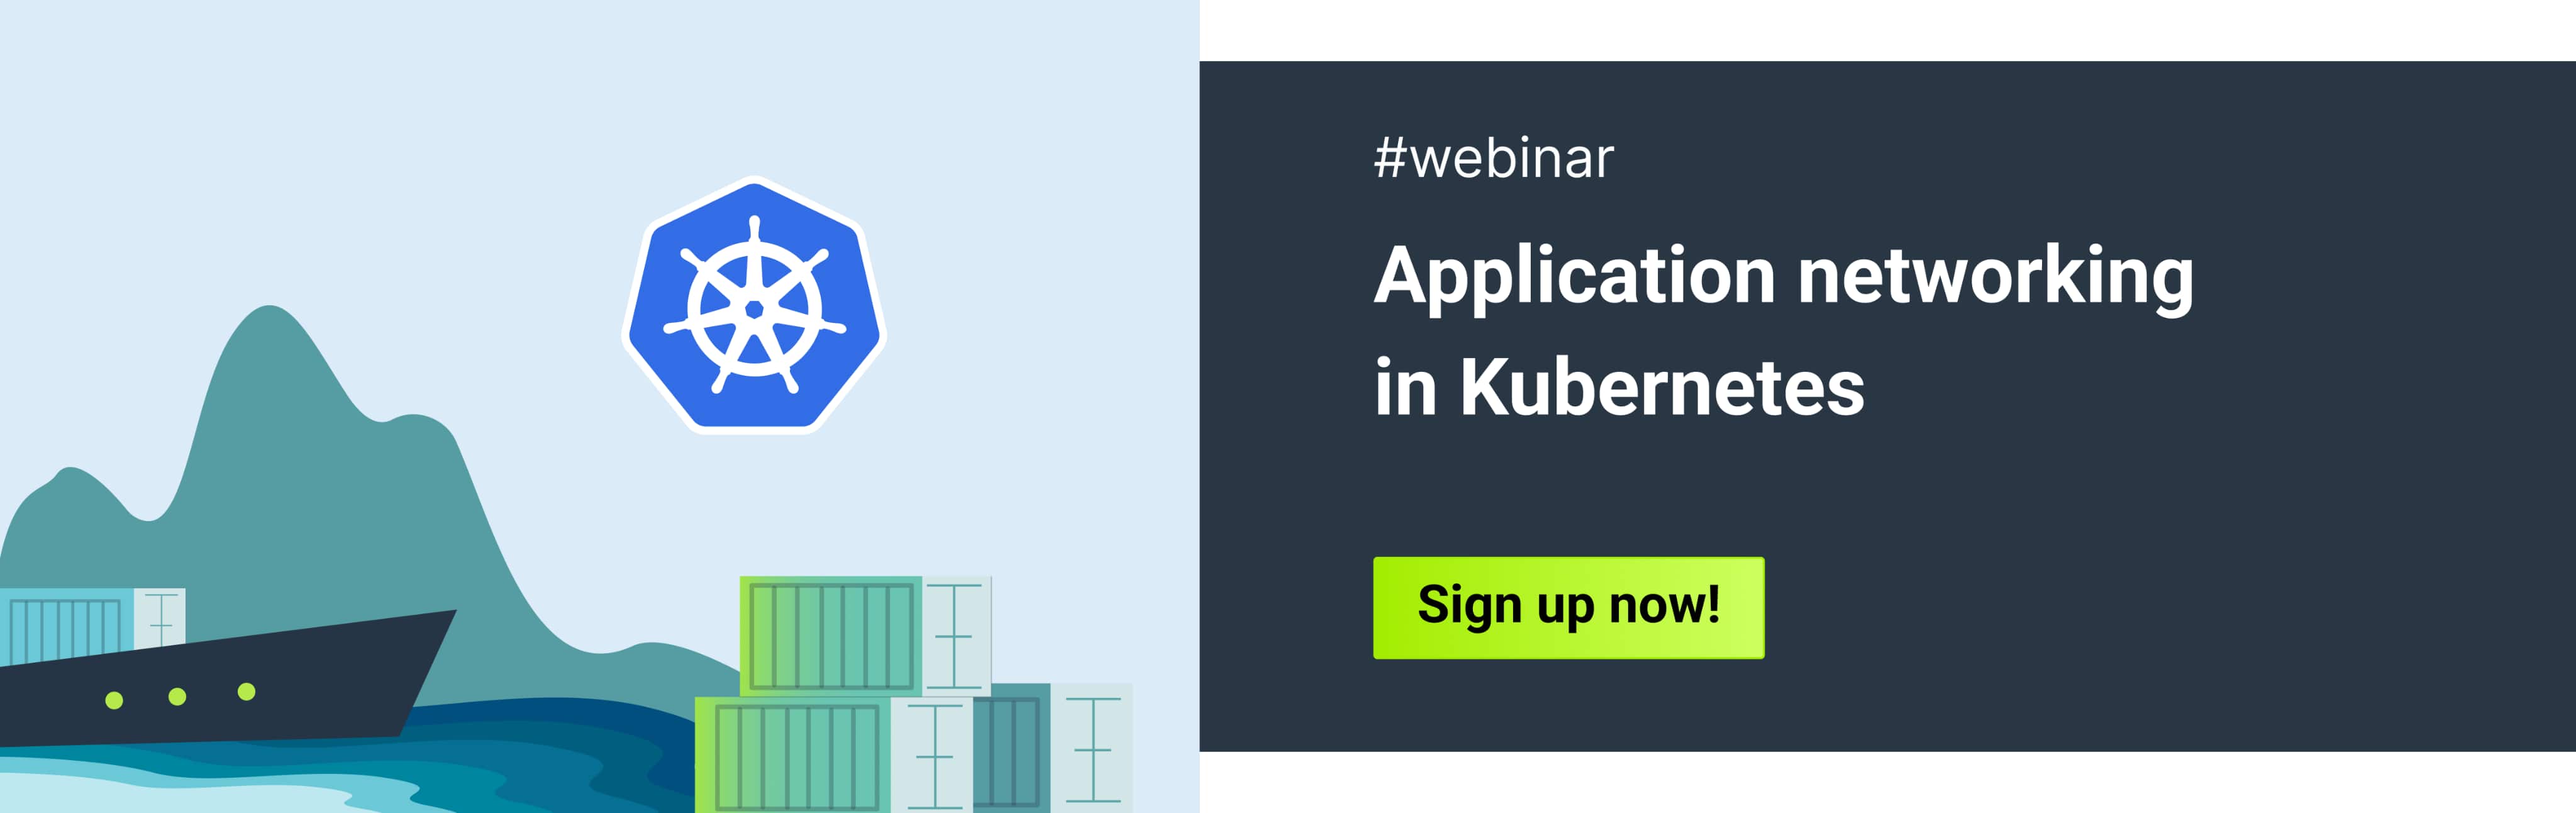 Webinar Application networking in Kubernetes